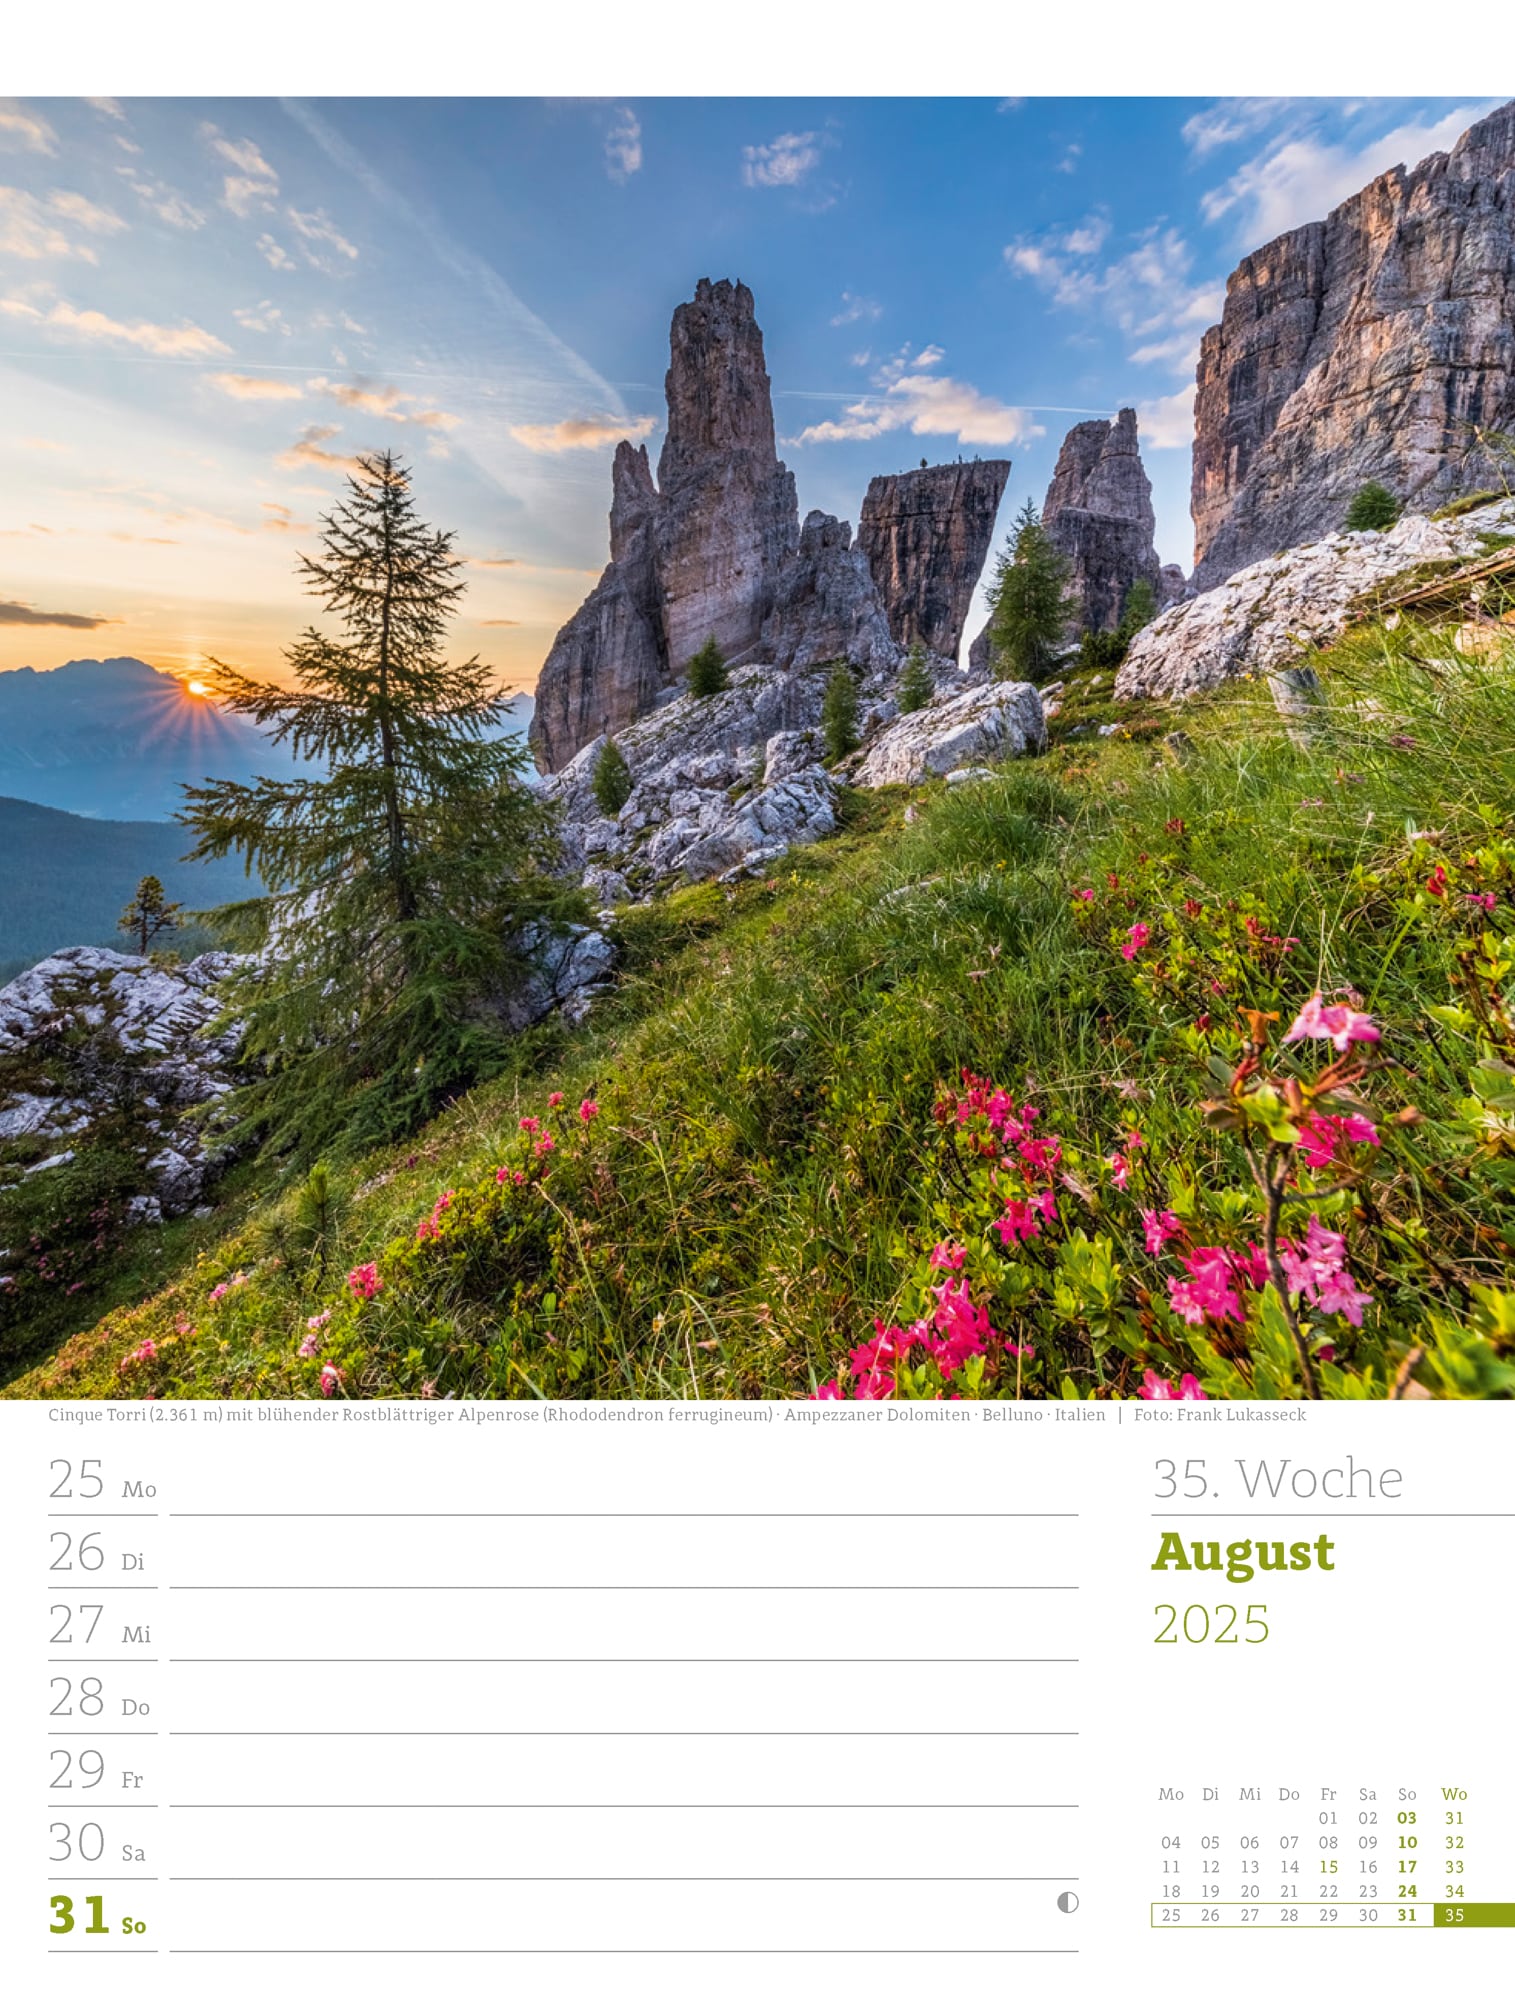 Ackermann Calendar Alps 2025 - Weekly Planner - Inside View 38